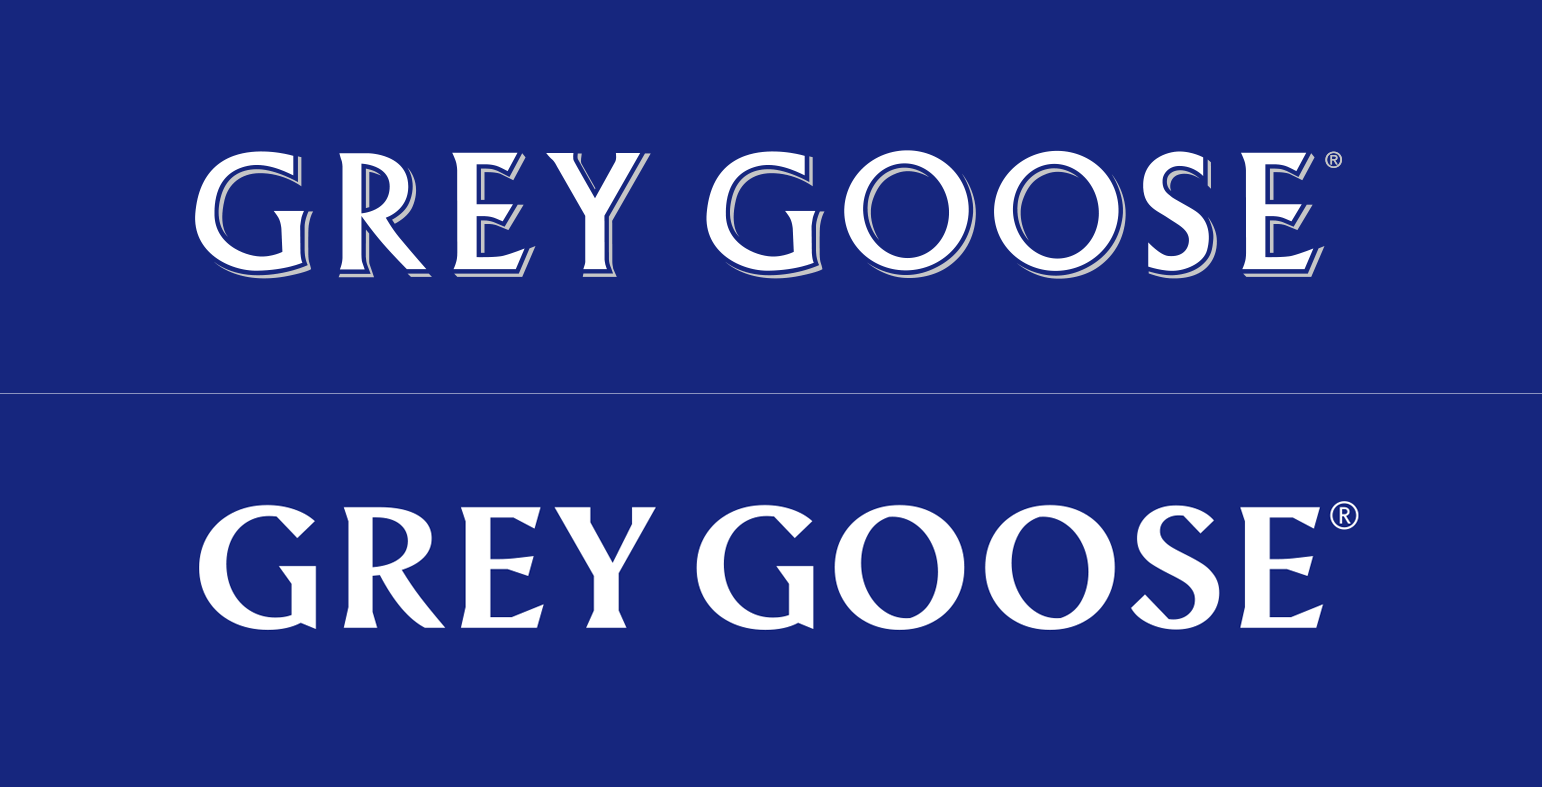 Grey Goose - Branding a global icon - Ragged Edge